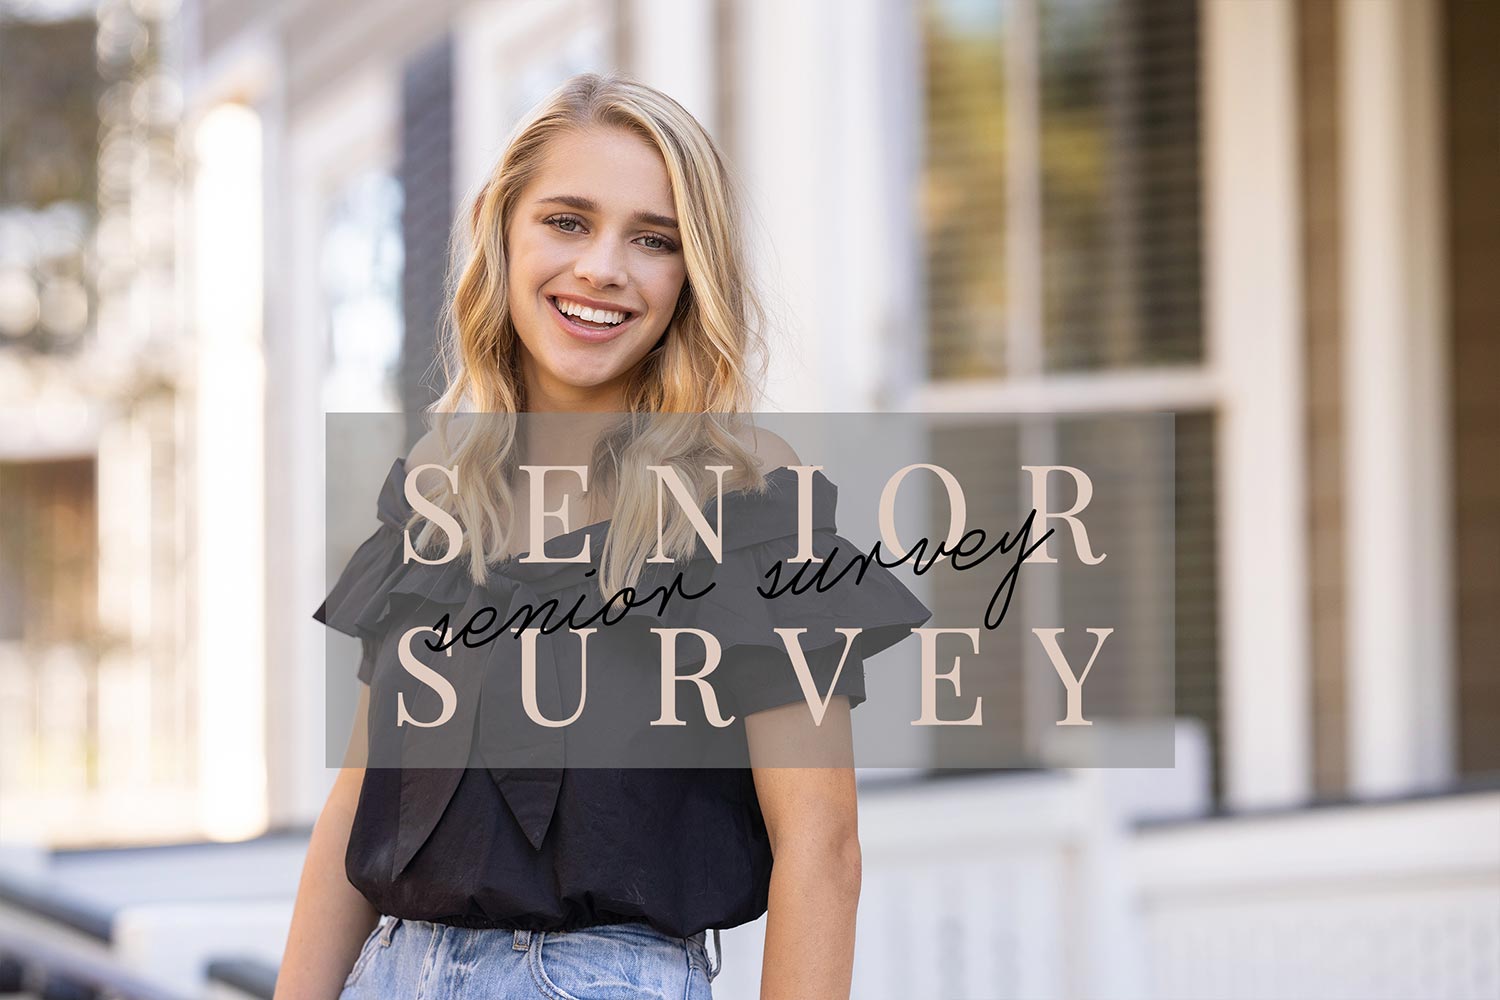 senior survey